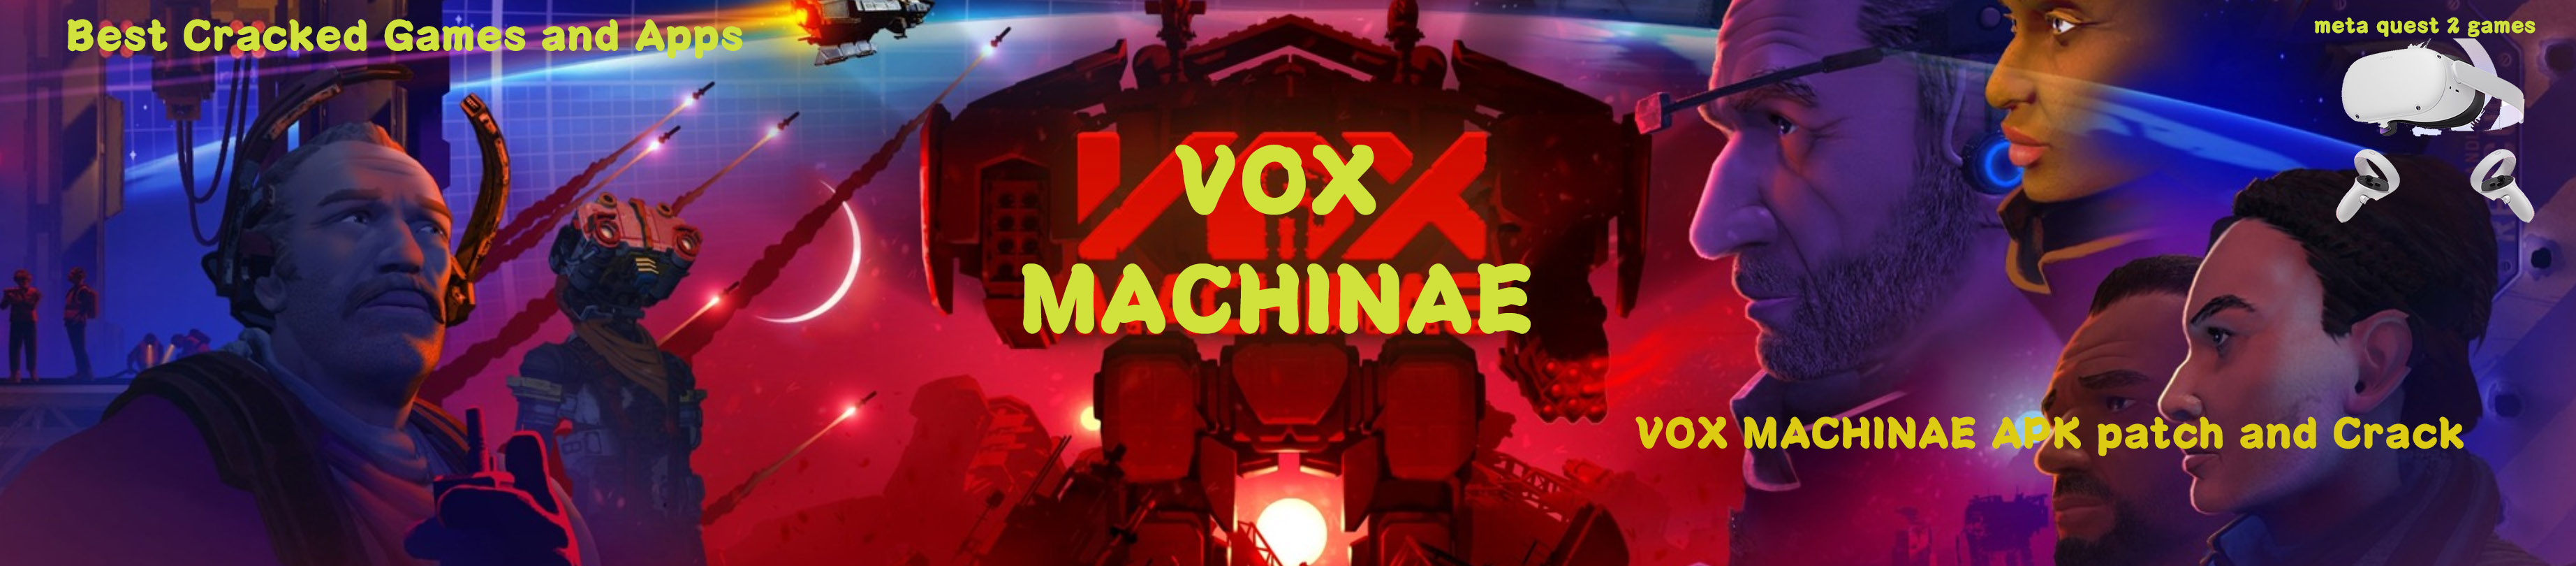 Vox Machinae VR, free cracked game download, free apk game